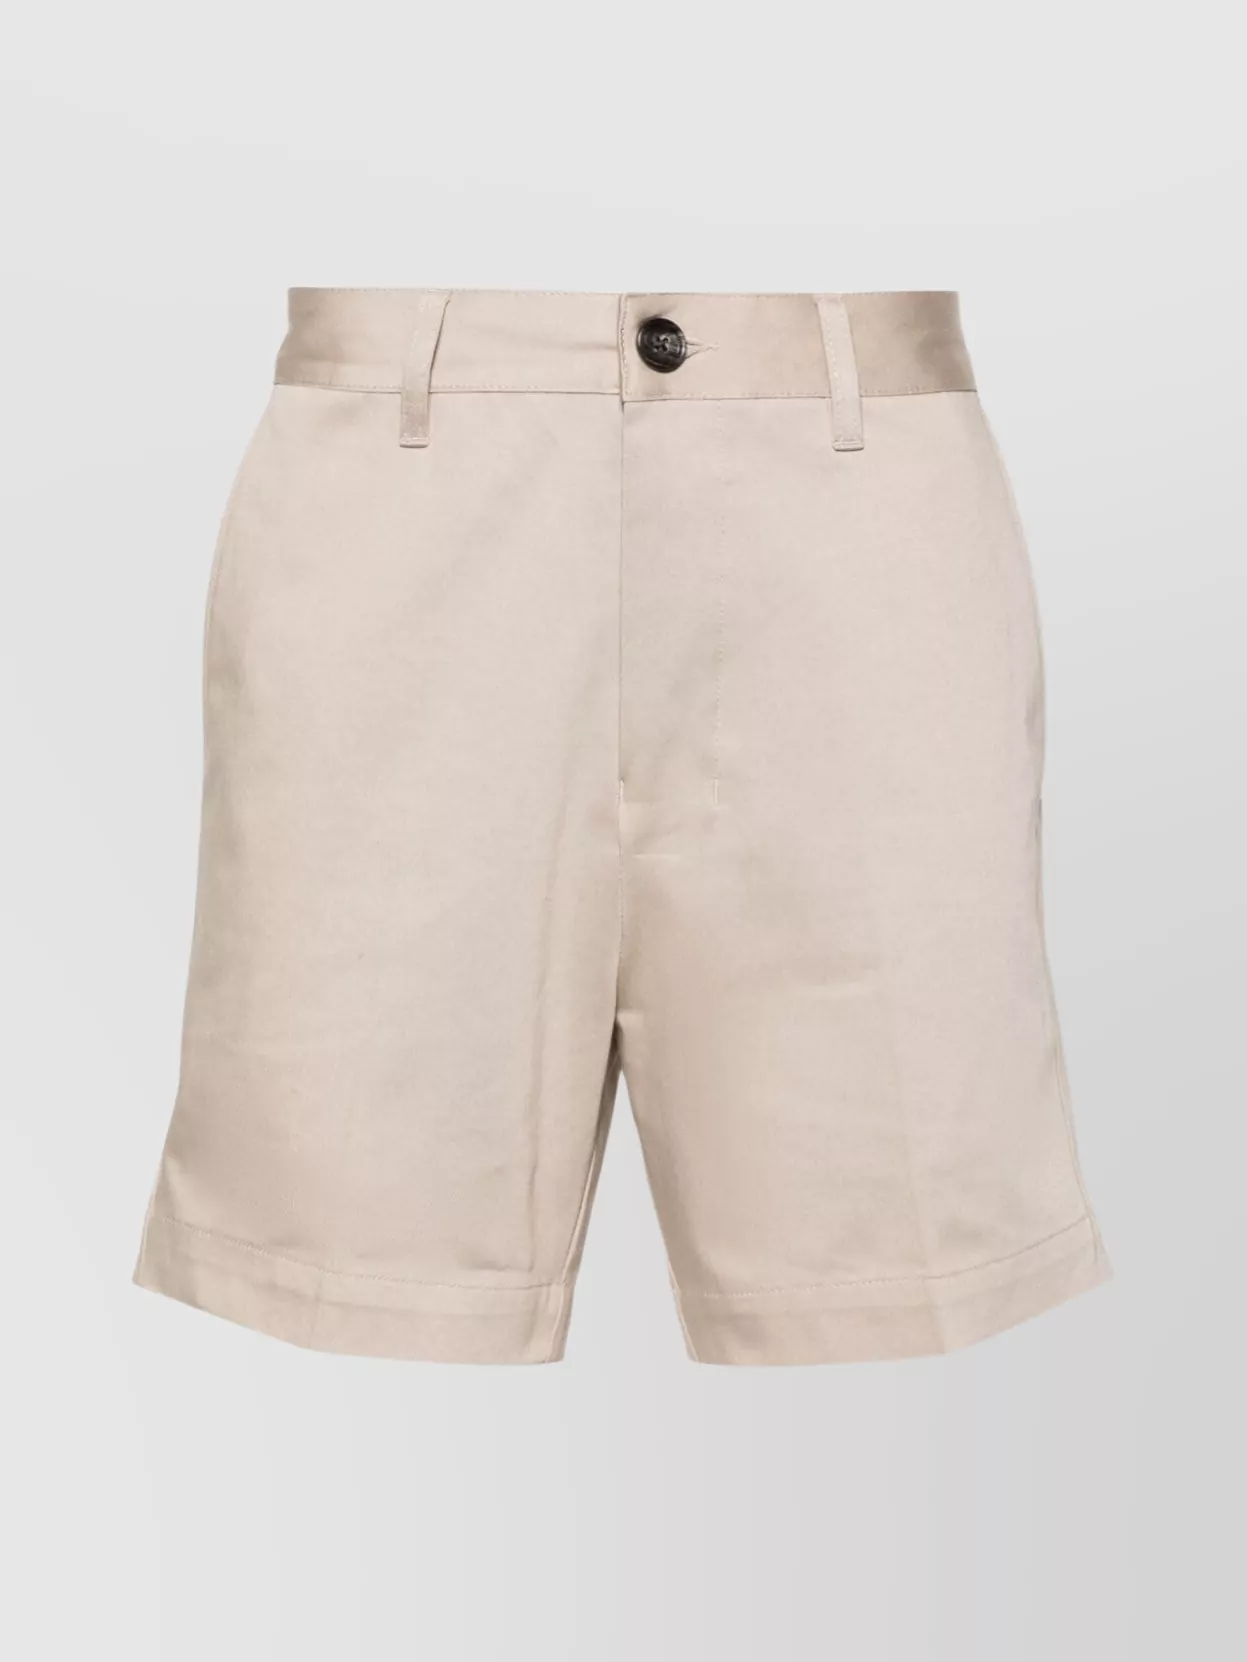 Shop Ami Alexandre Mattiussi Tailored Shorts Featuring Pockets